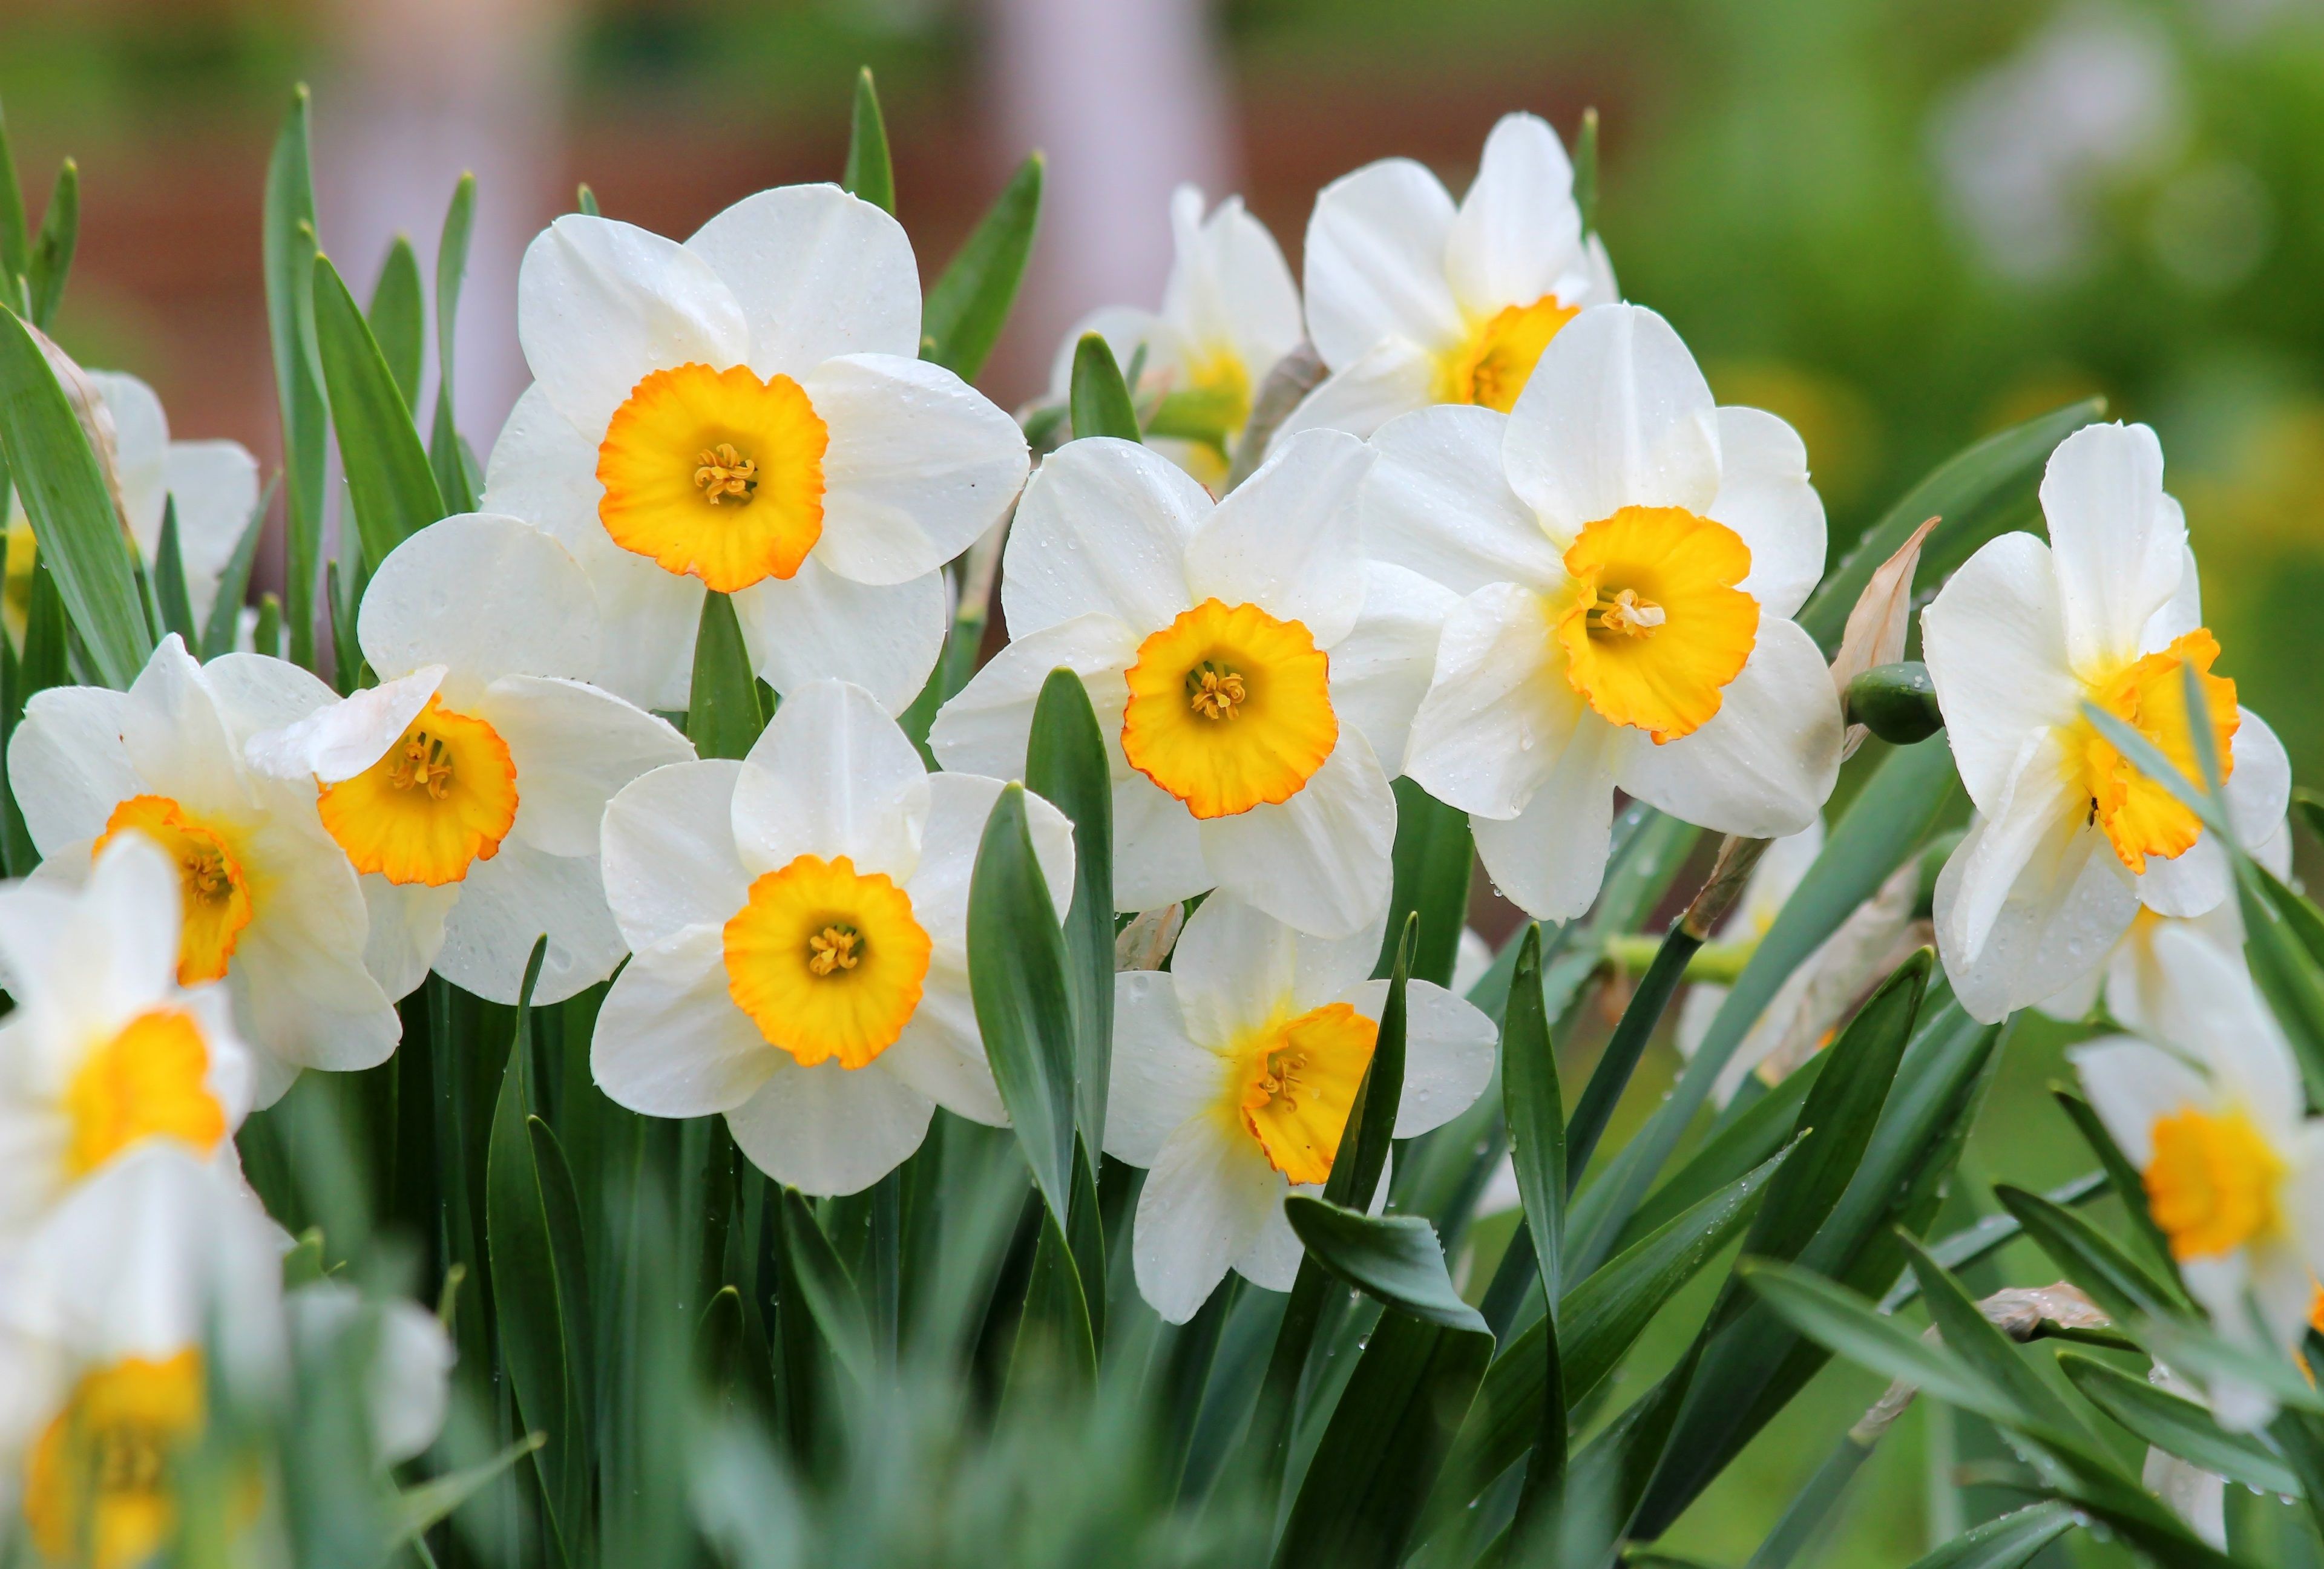 Daffodil Images  Free Download on Freepik